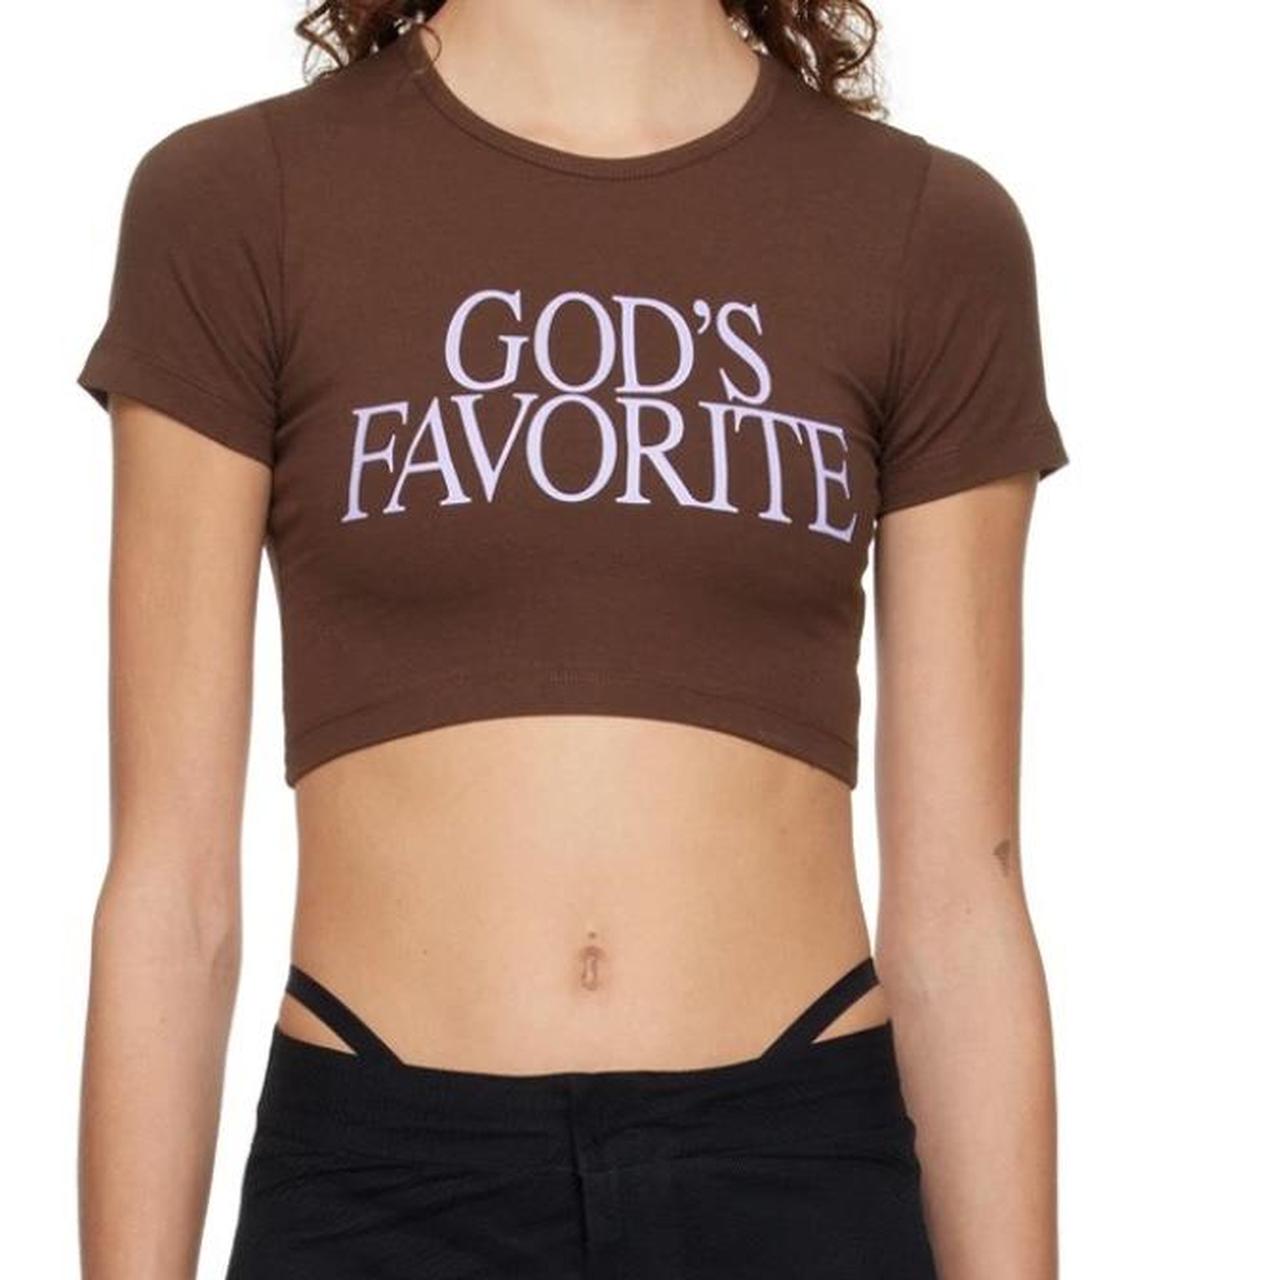 God's Favorite Shirt Olivia Rodrigo Merch